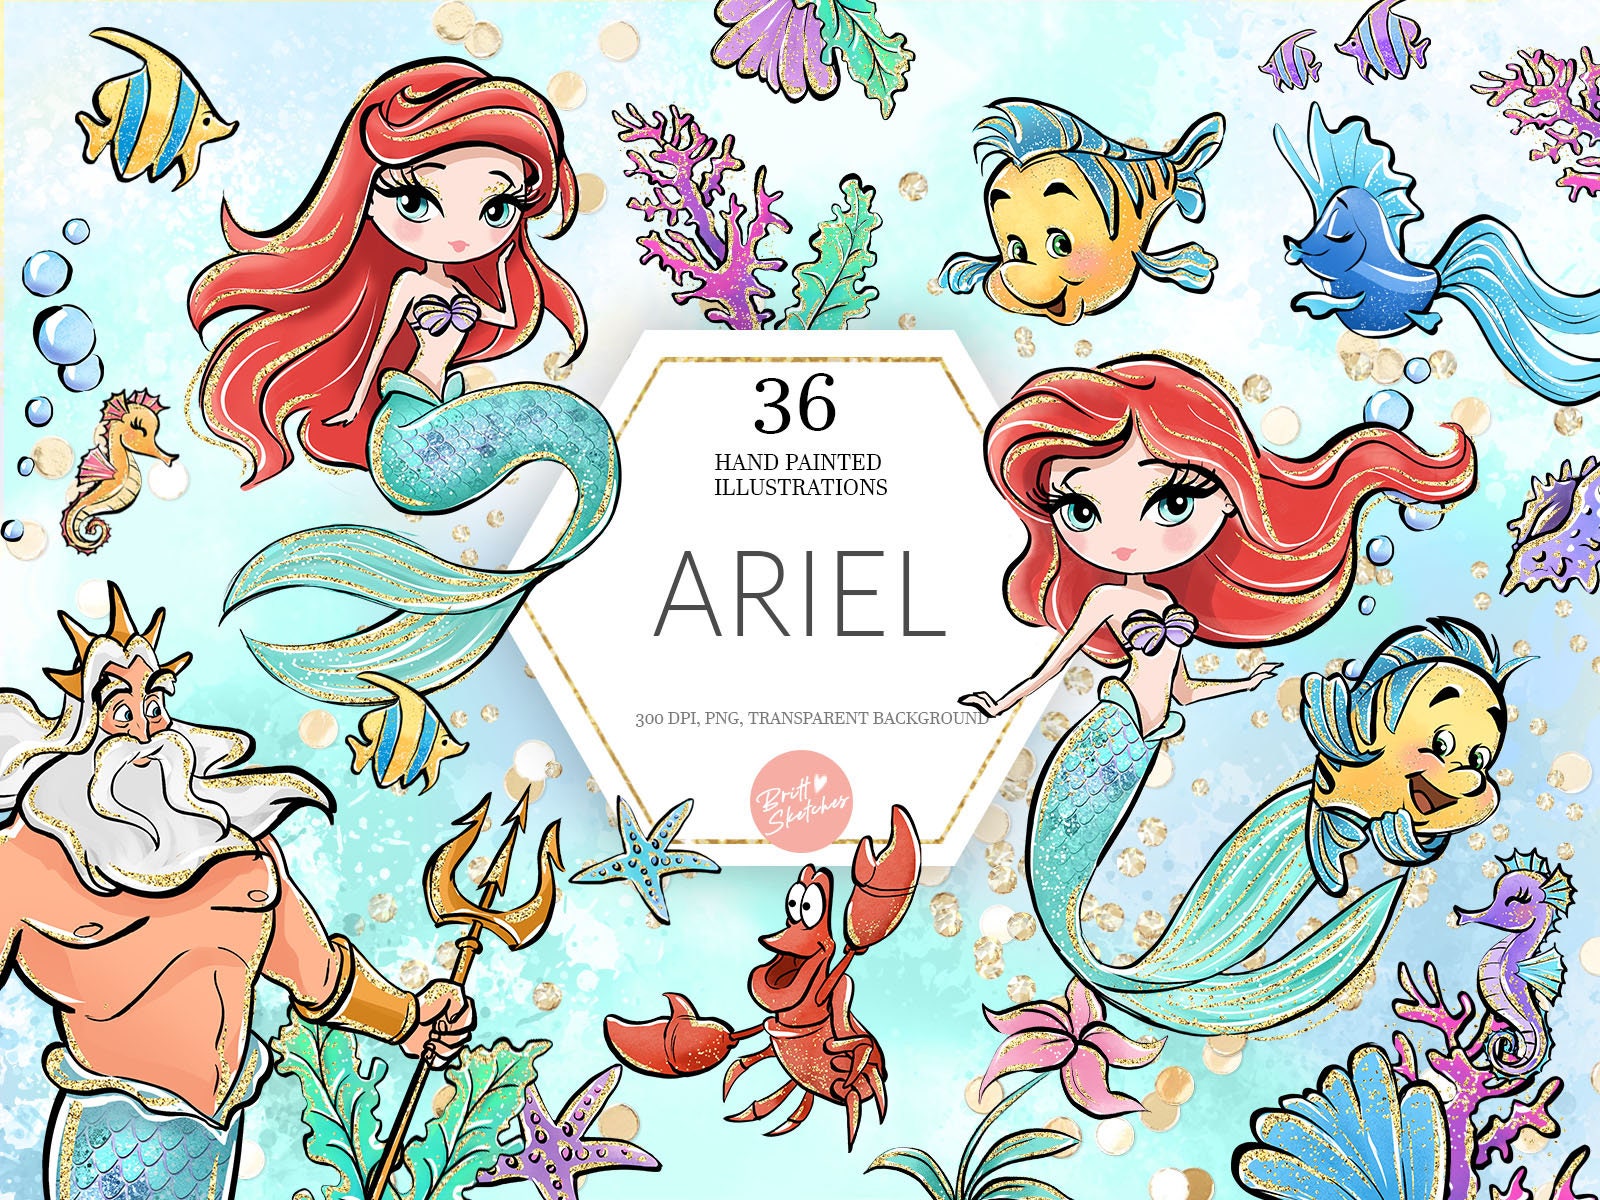 File:Ariel pods.jpg - Wikimedia Commons